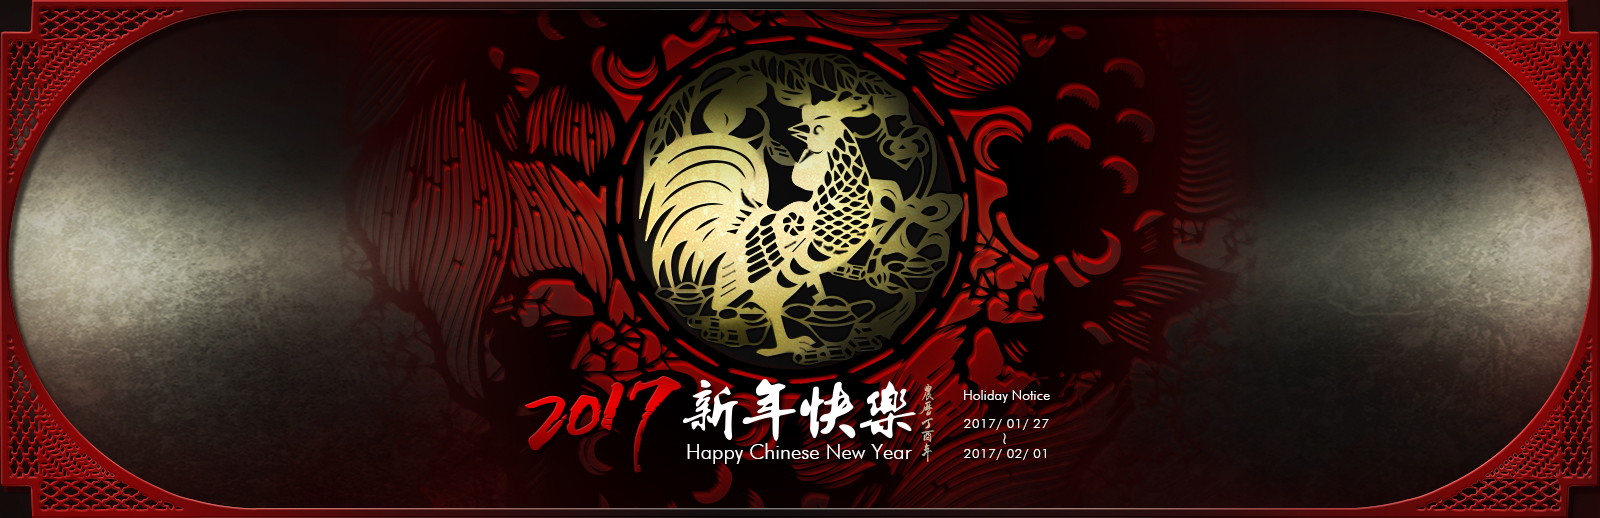 2017 Happy Chinese New Year